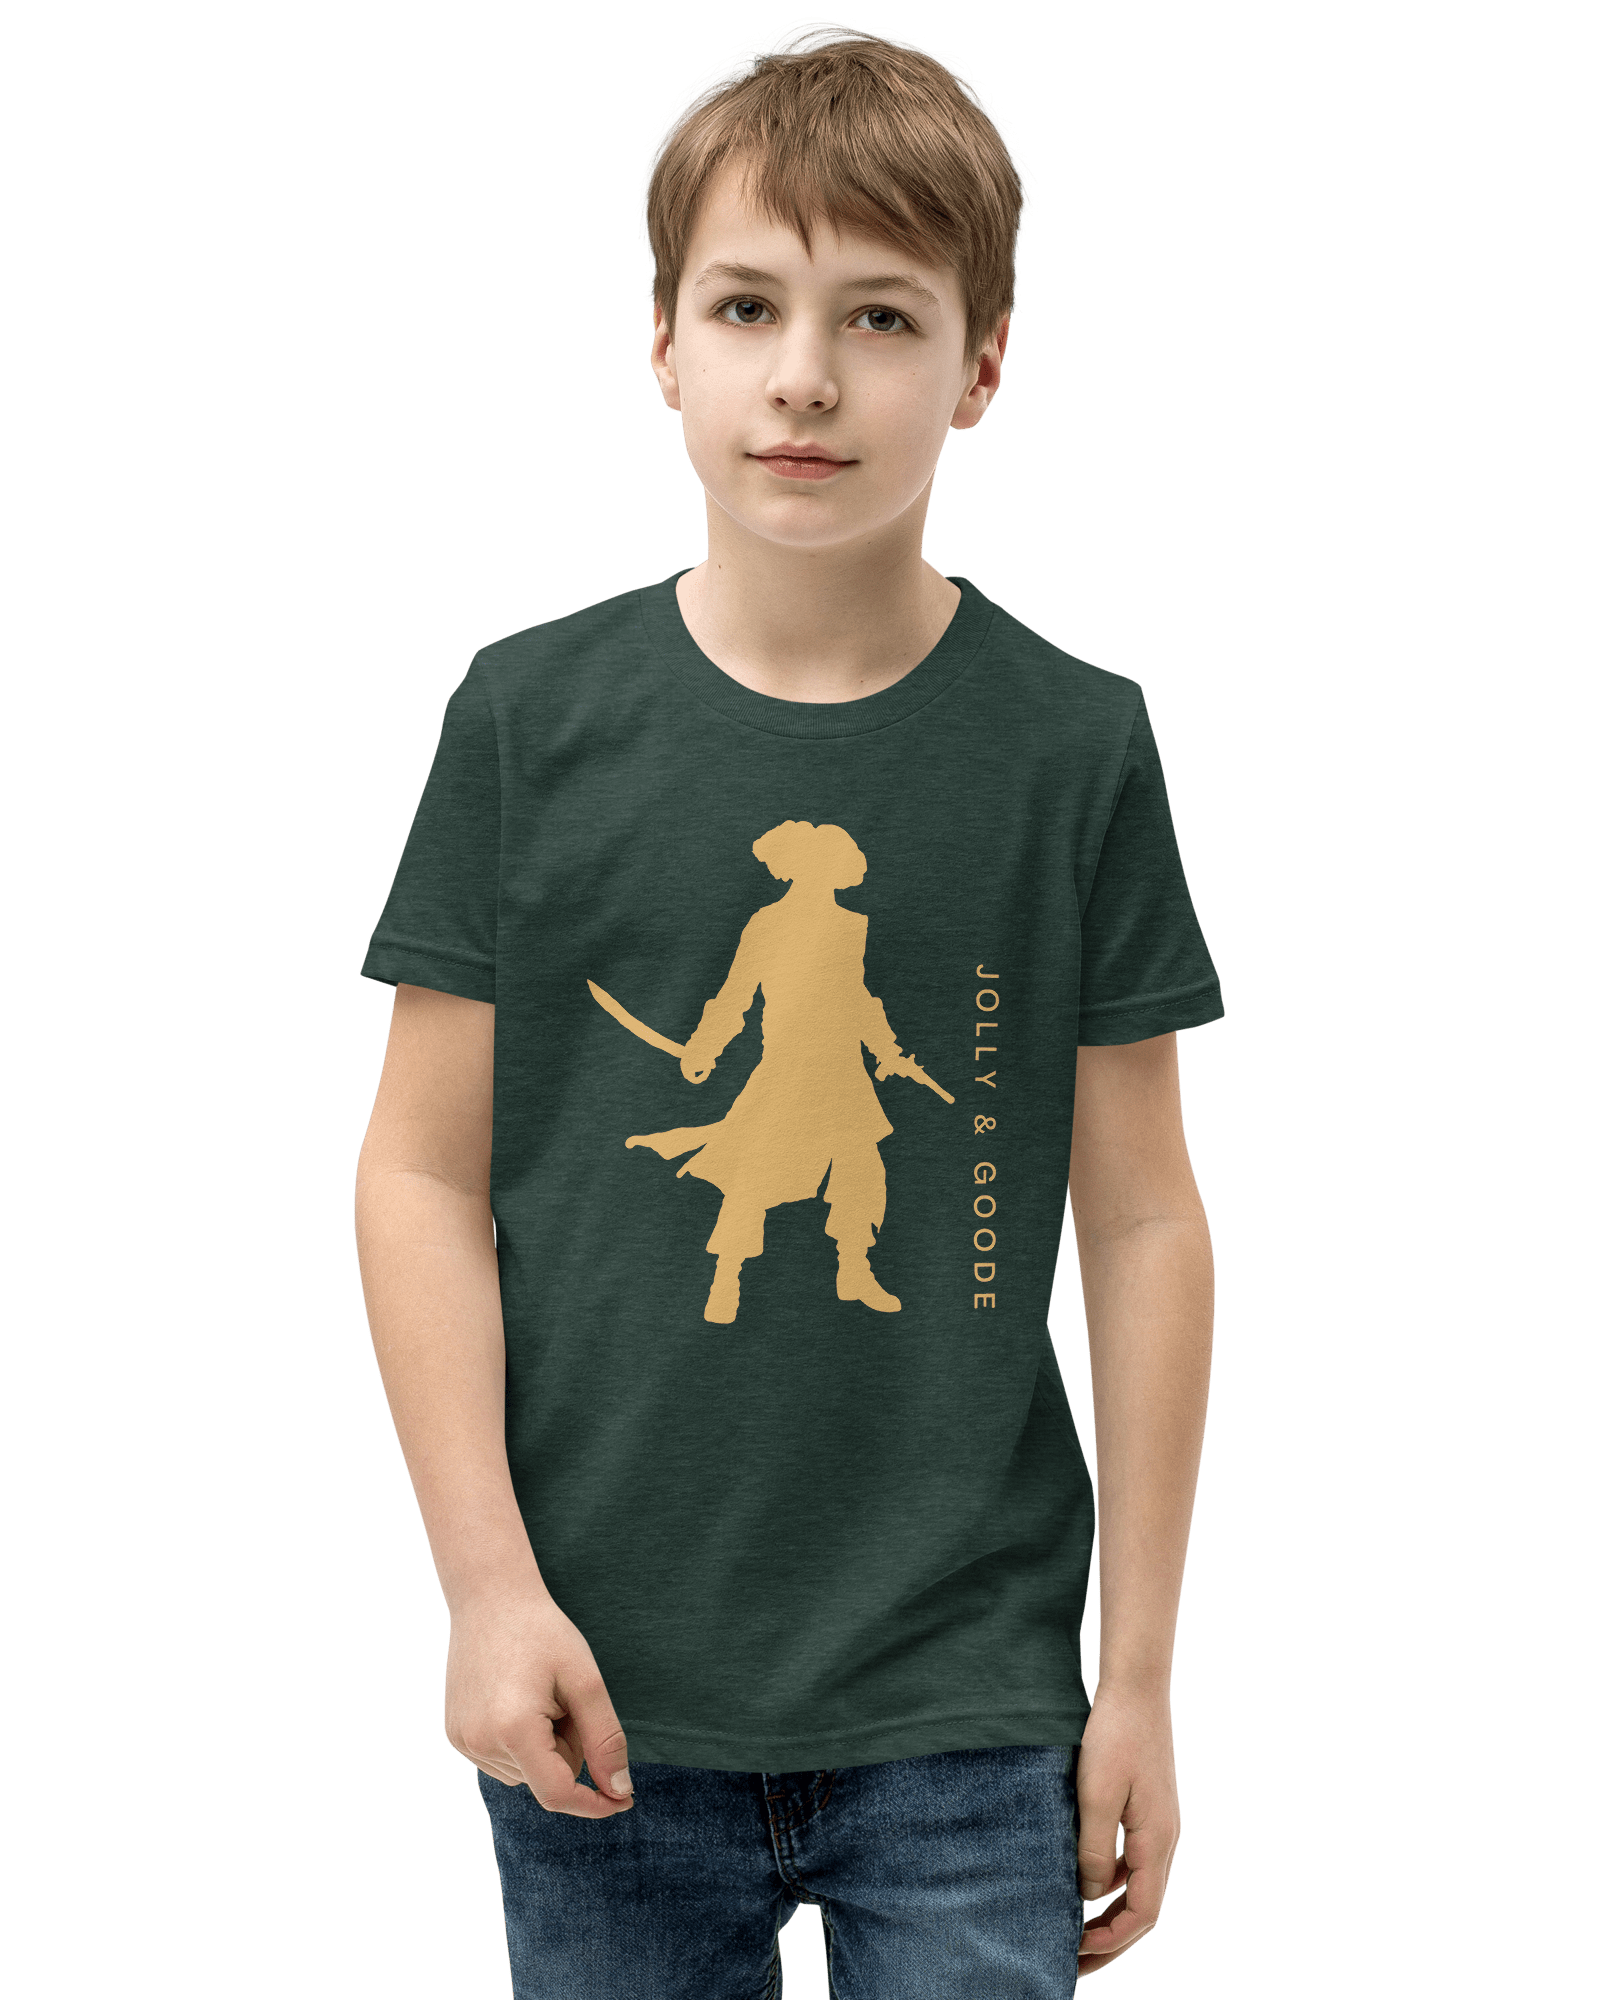 Jolly & Goode Pirate Silhouette Kids T-Shirt Heather Forest / S kids t-shirts Jolly & Goode